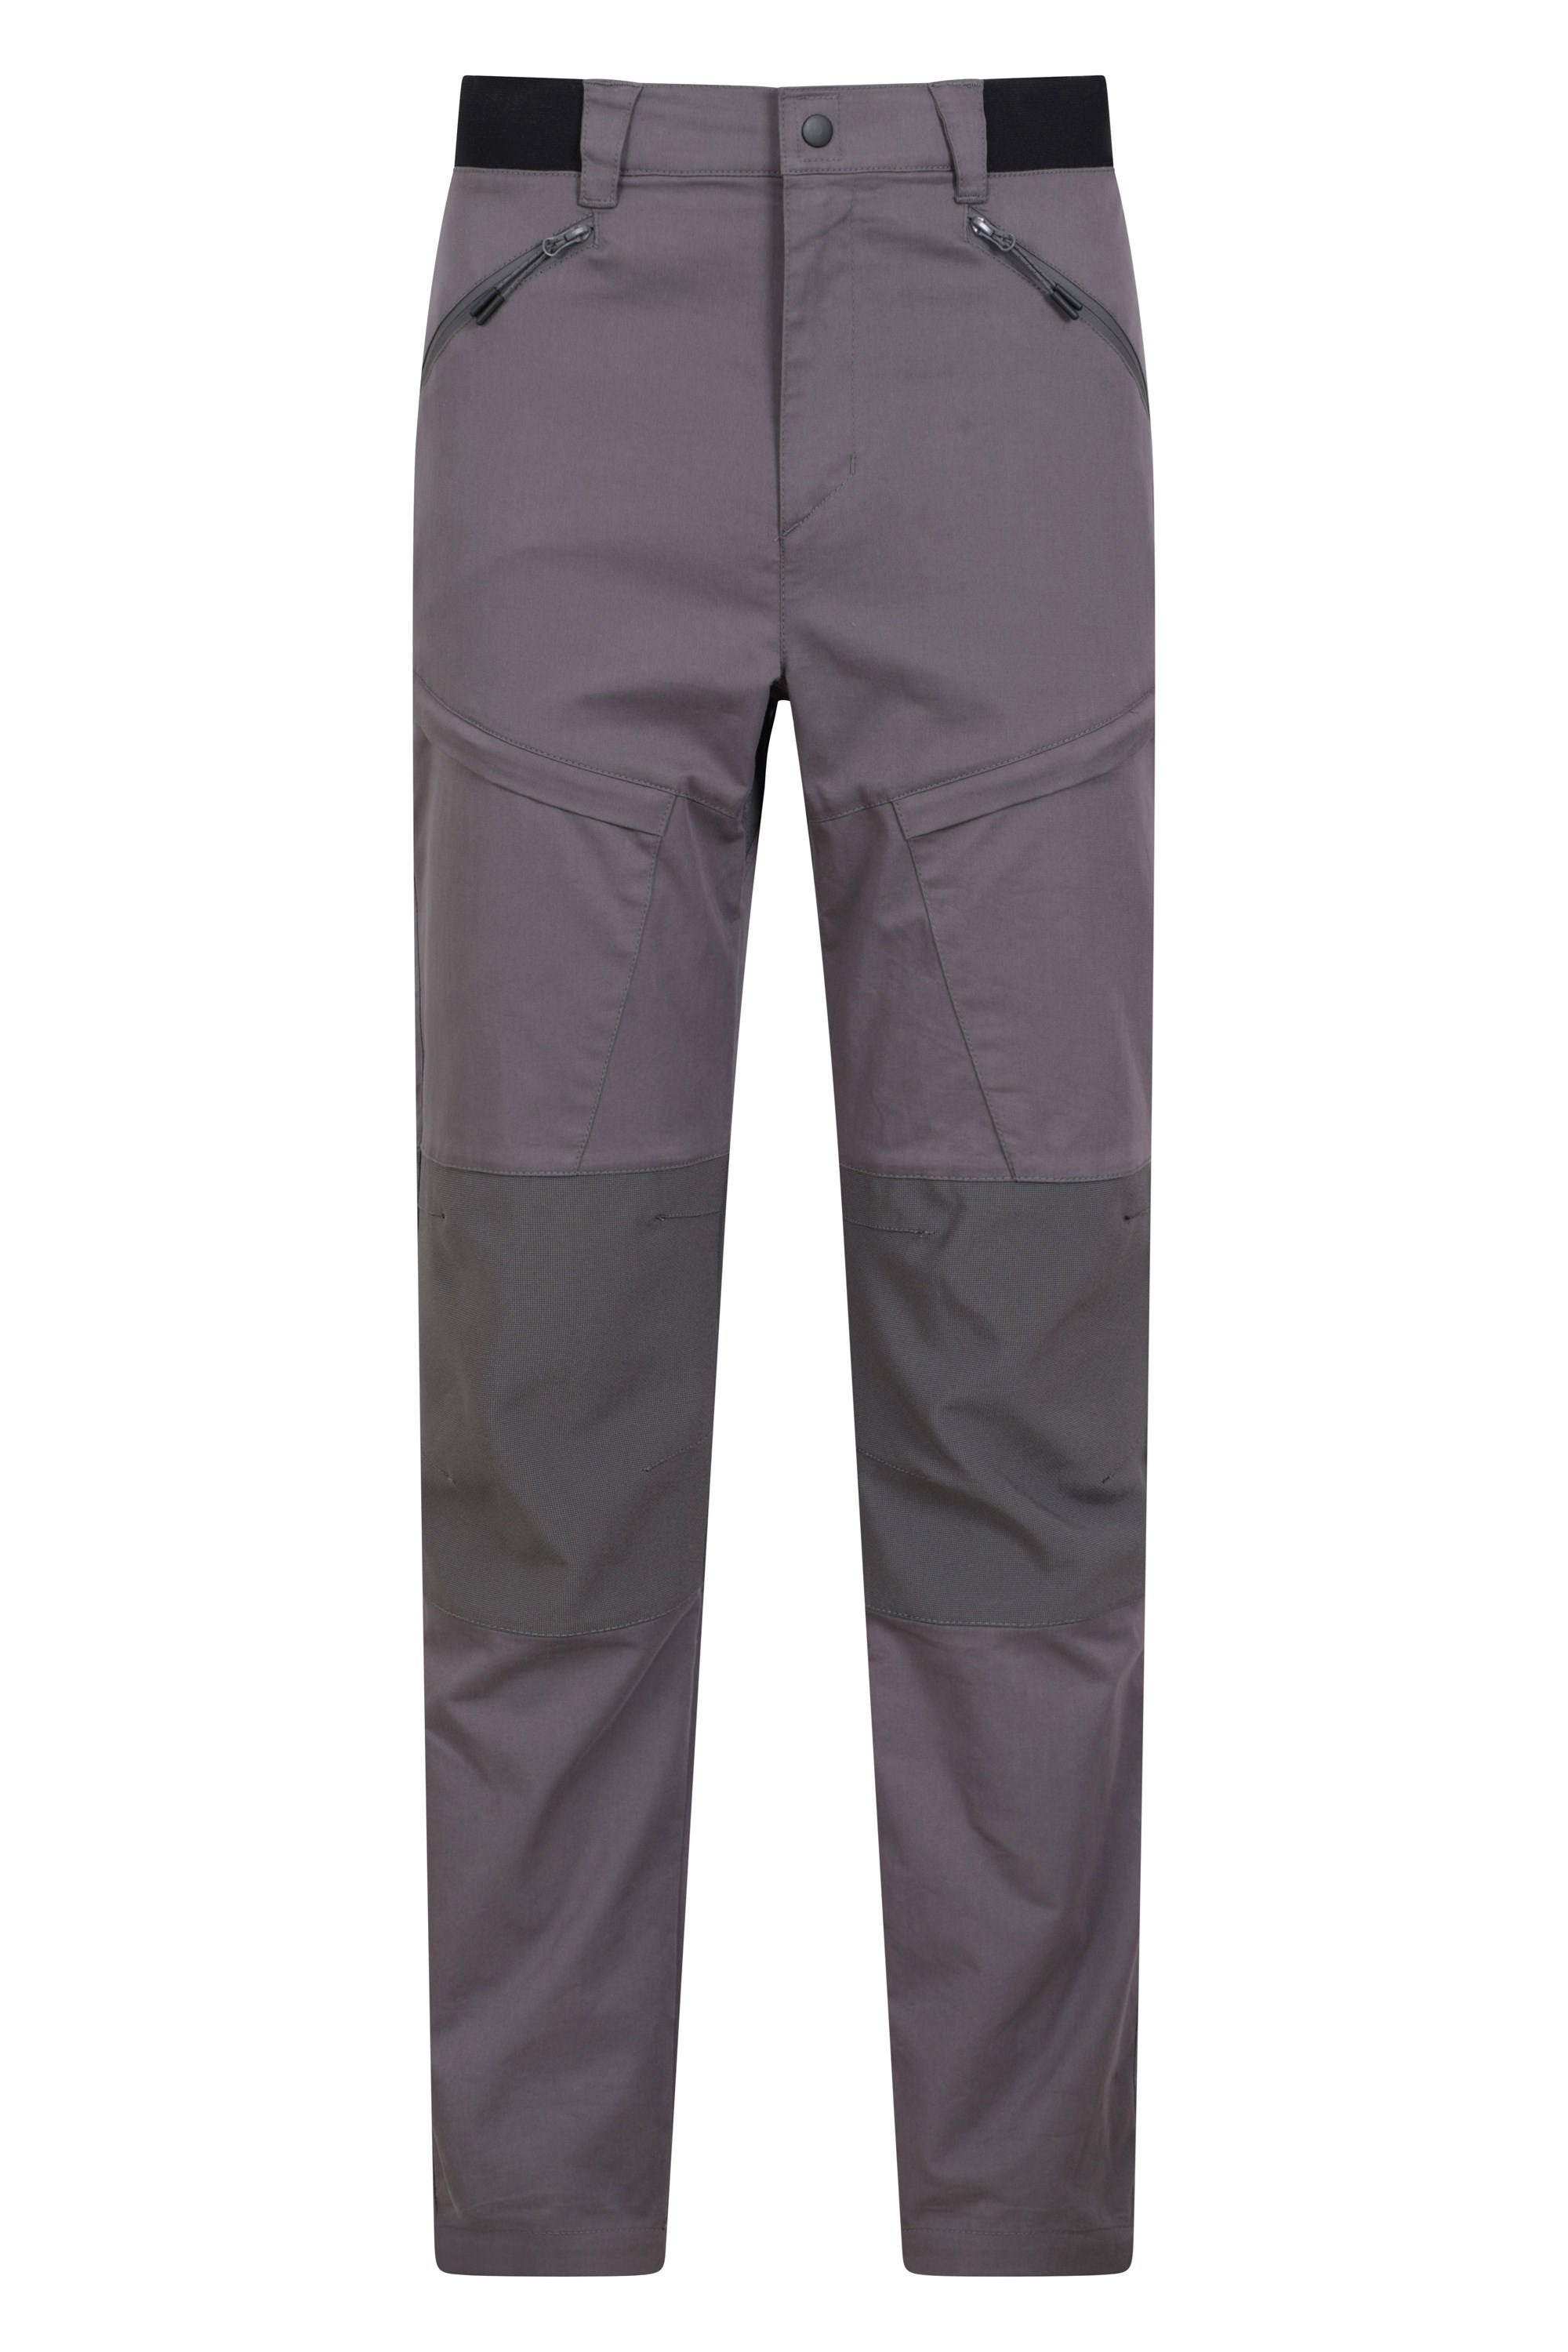 Mountain Warehouse Jungle Mens Trekking Pants - Short Length - Black | Size W34